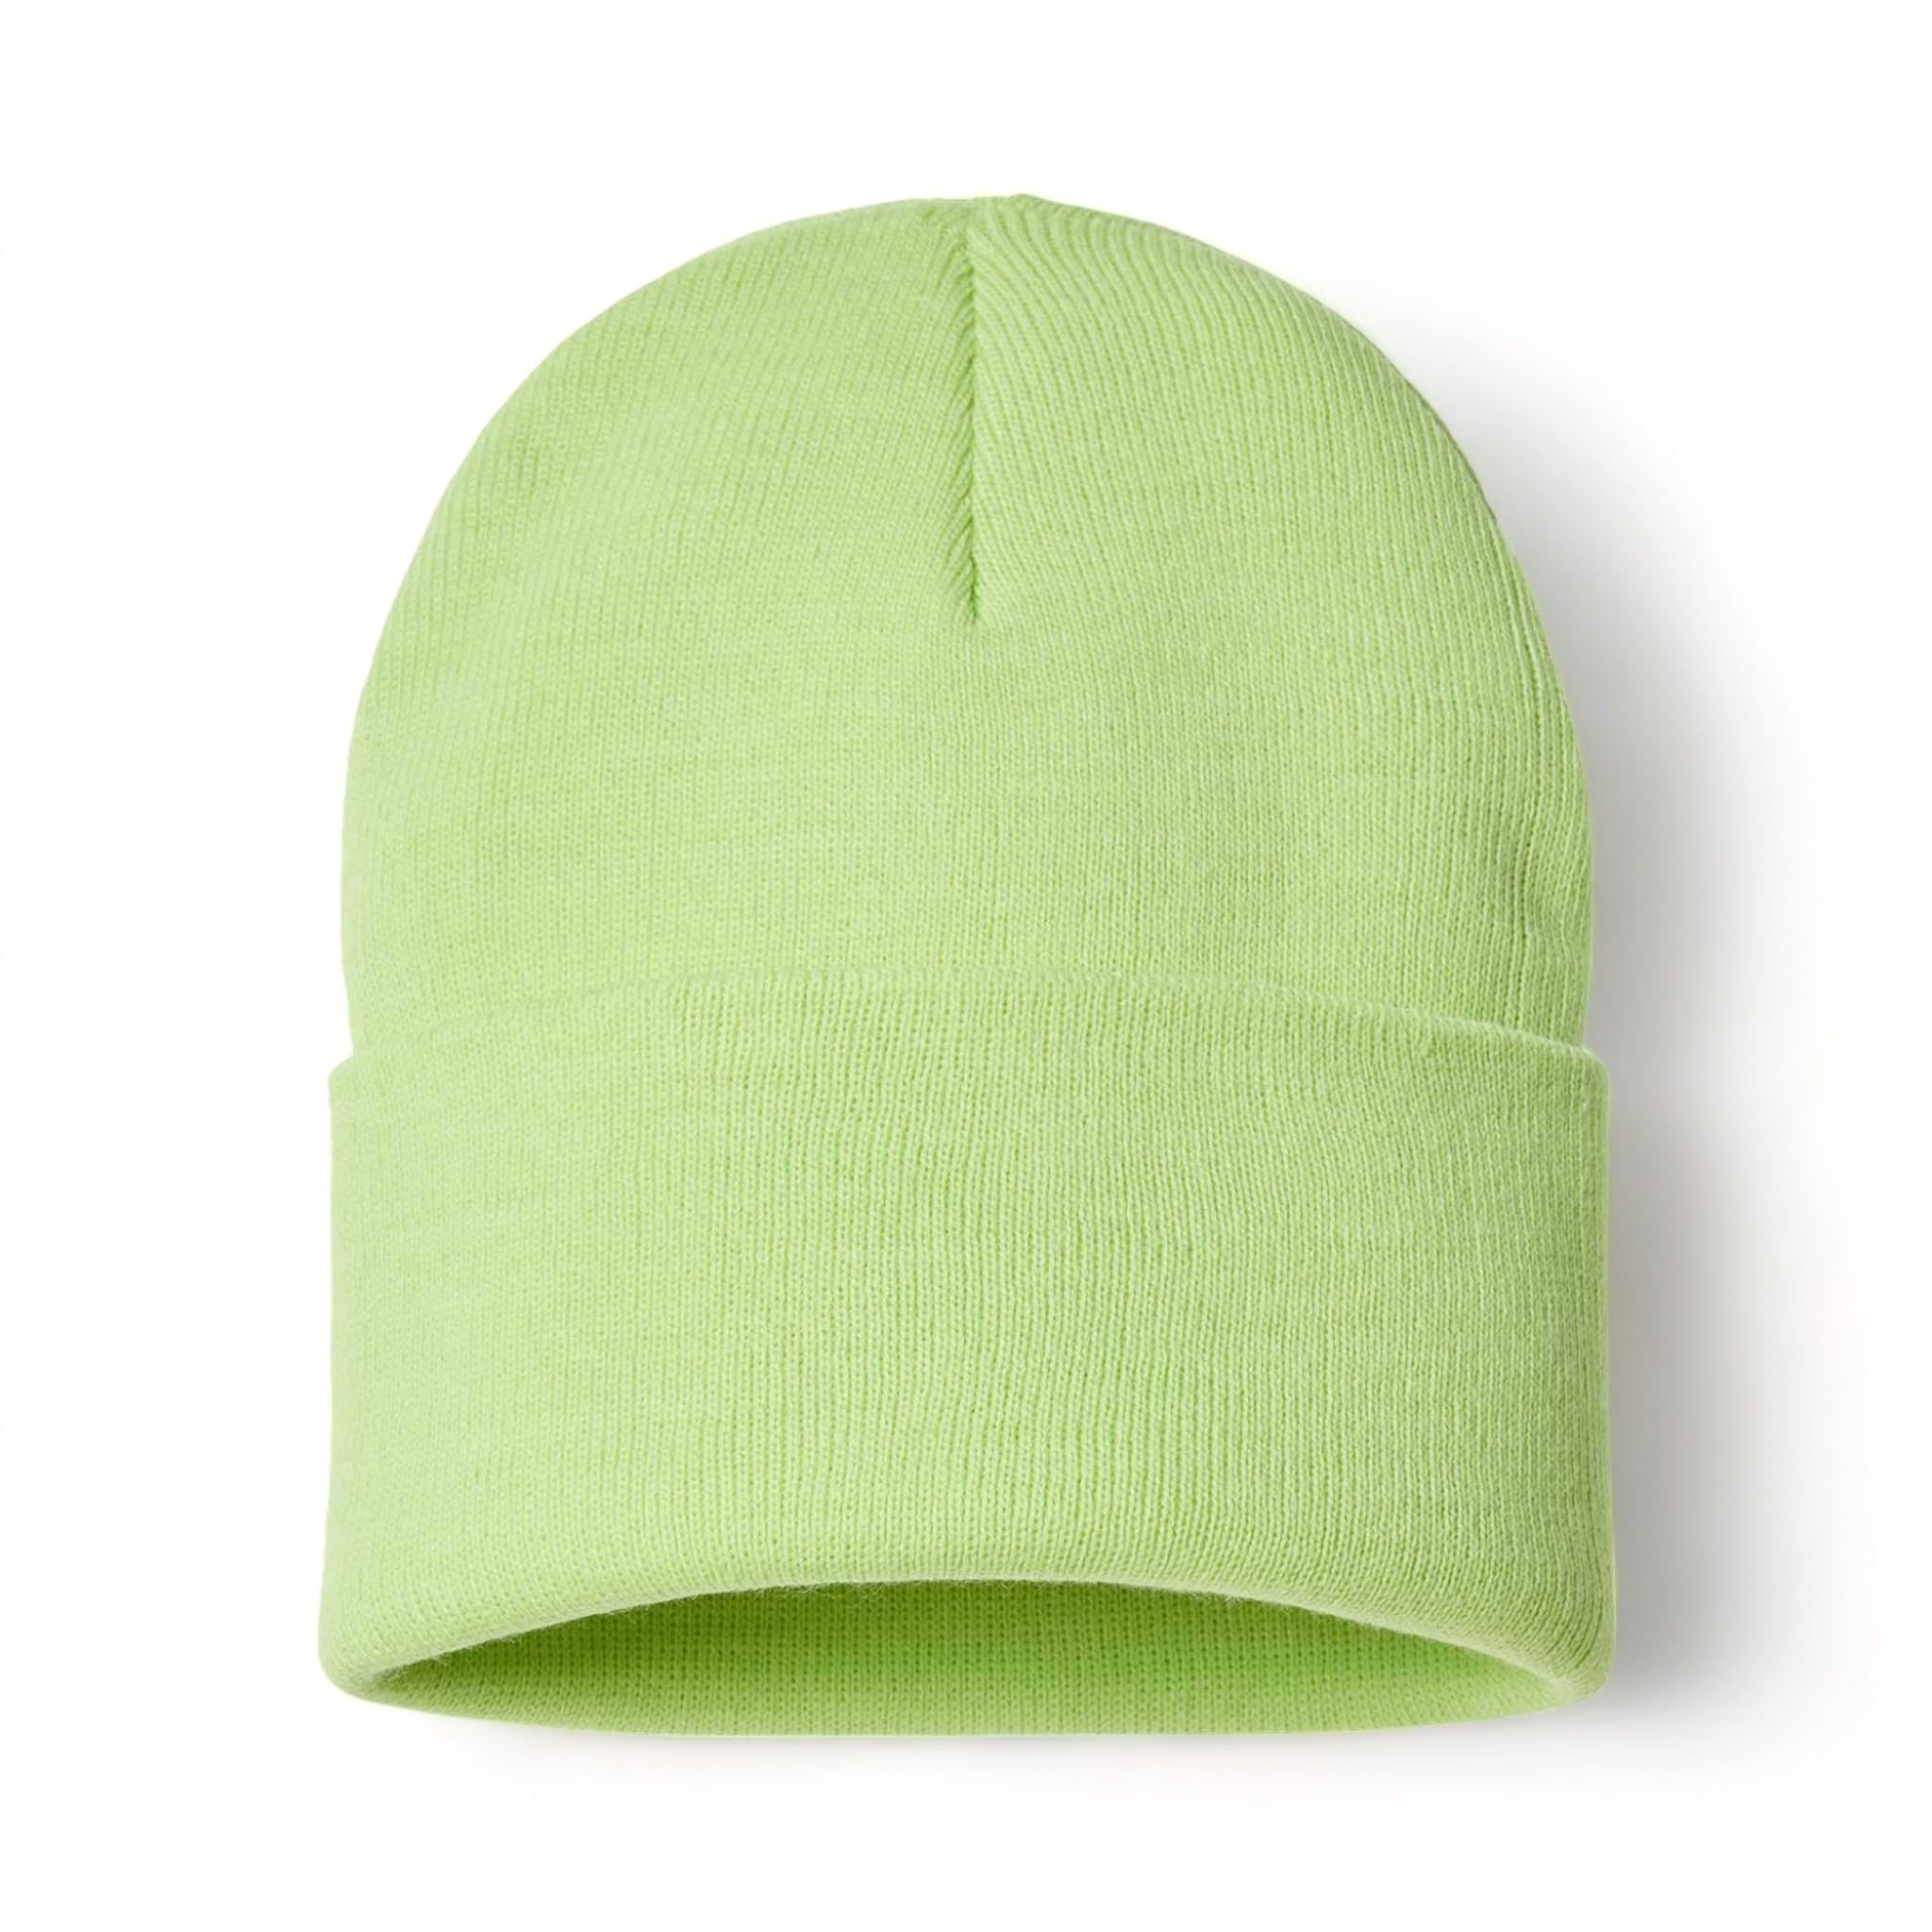 Front view of Atlantis Headwear PURE custom hat in acid green